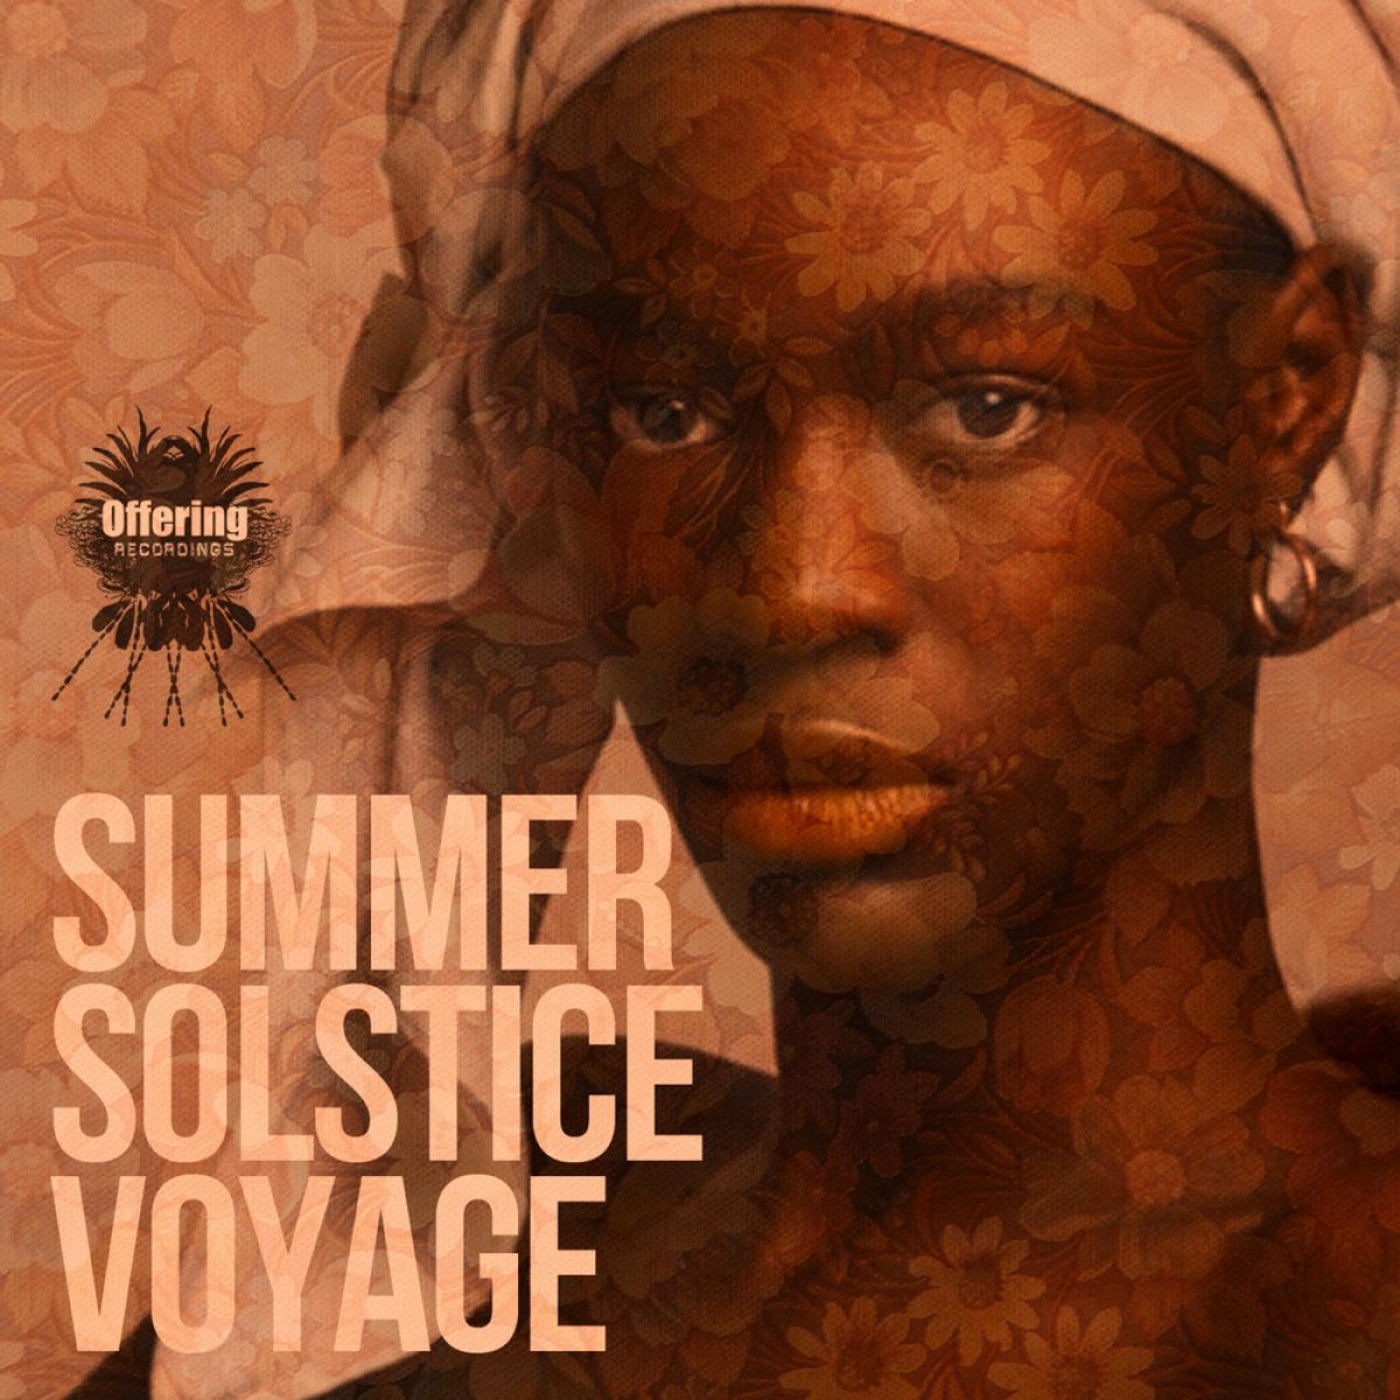 VA - Summer Solstice Voyage / Offering Recordings